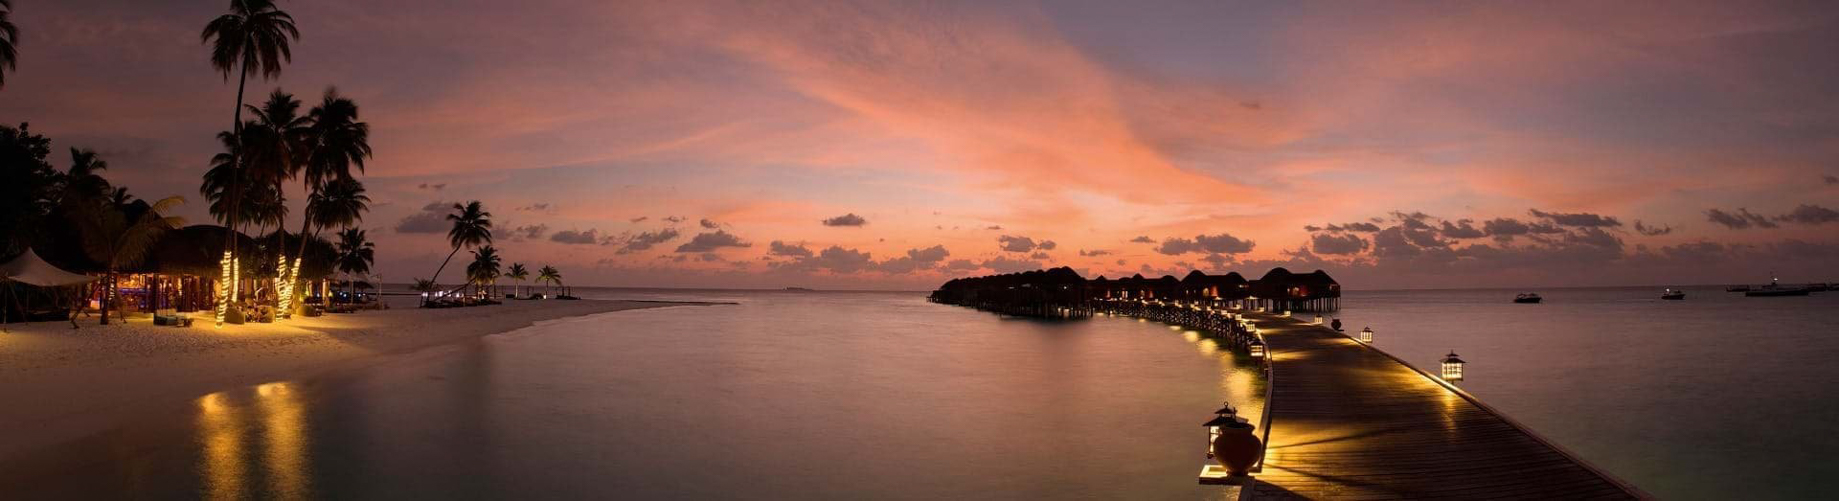 Constance Halaveli Resort - North Ari Atoll, Maldives - Resort Sunset View